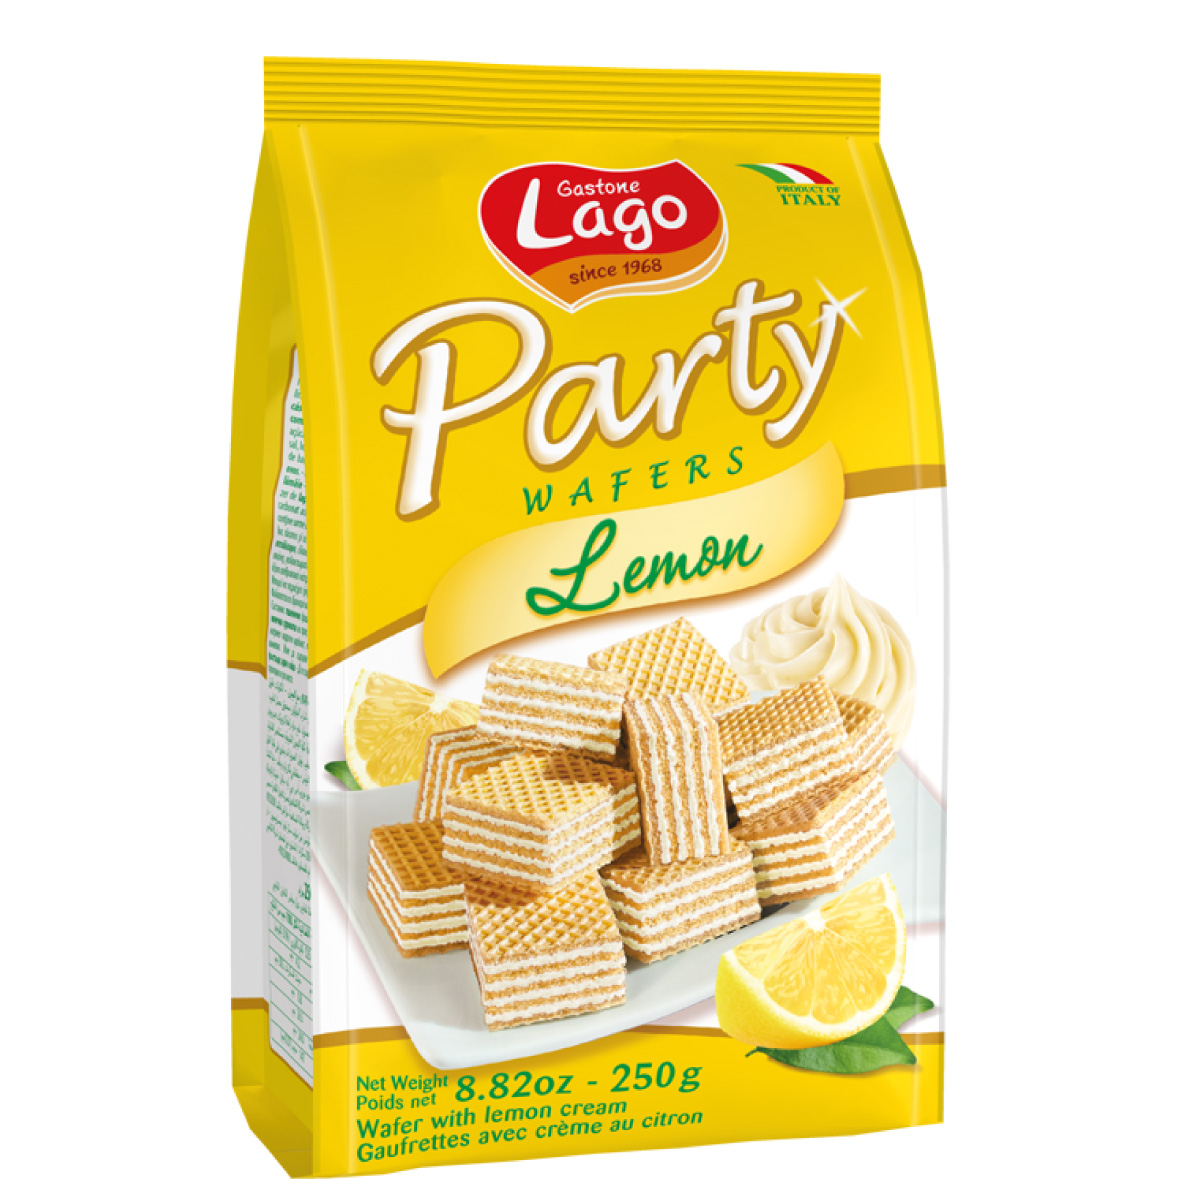 Lago Party Wafers Lemon 250g snacks malaysia